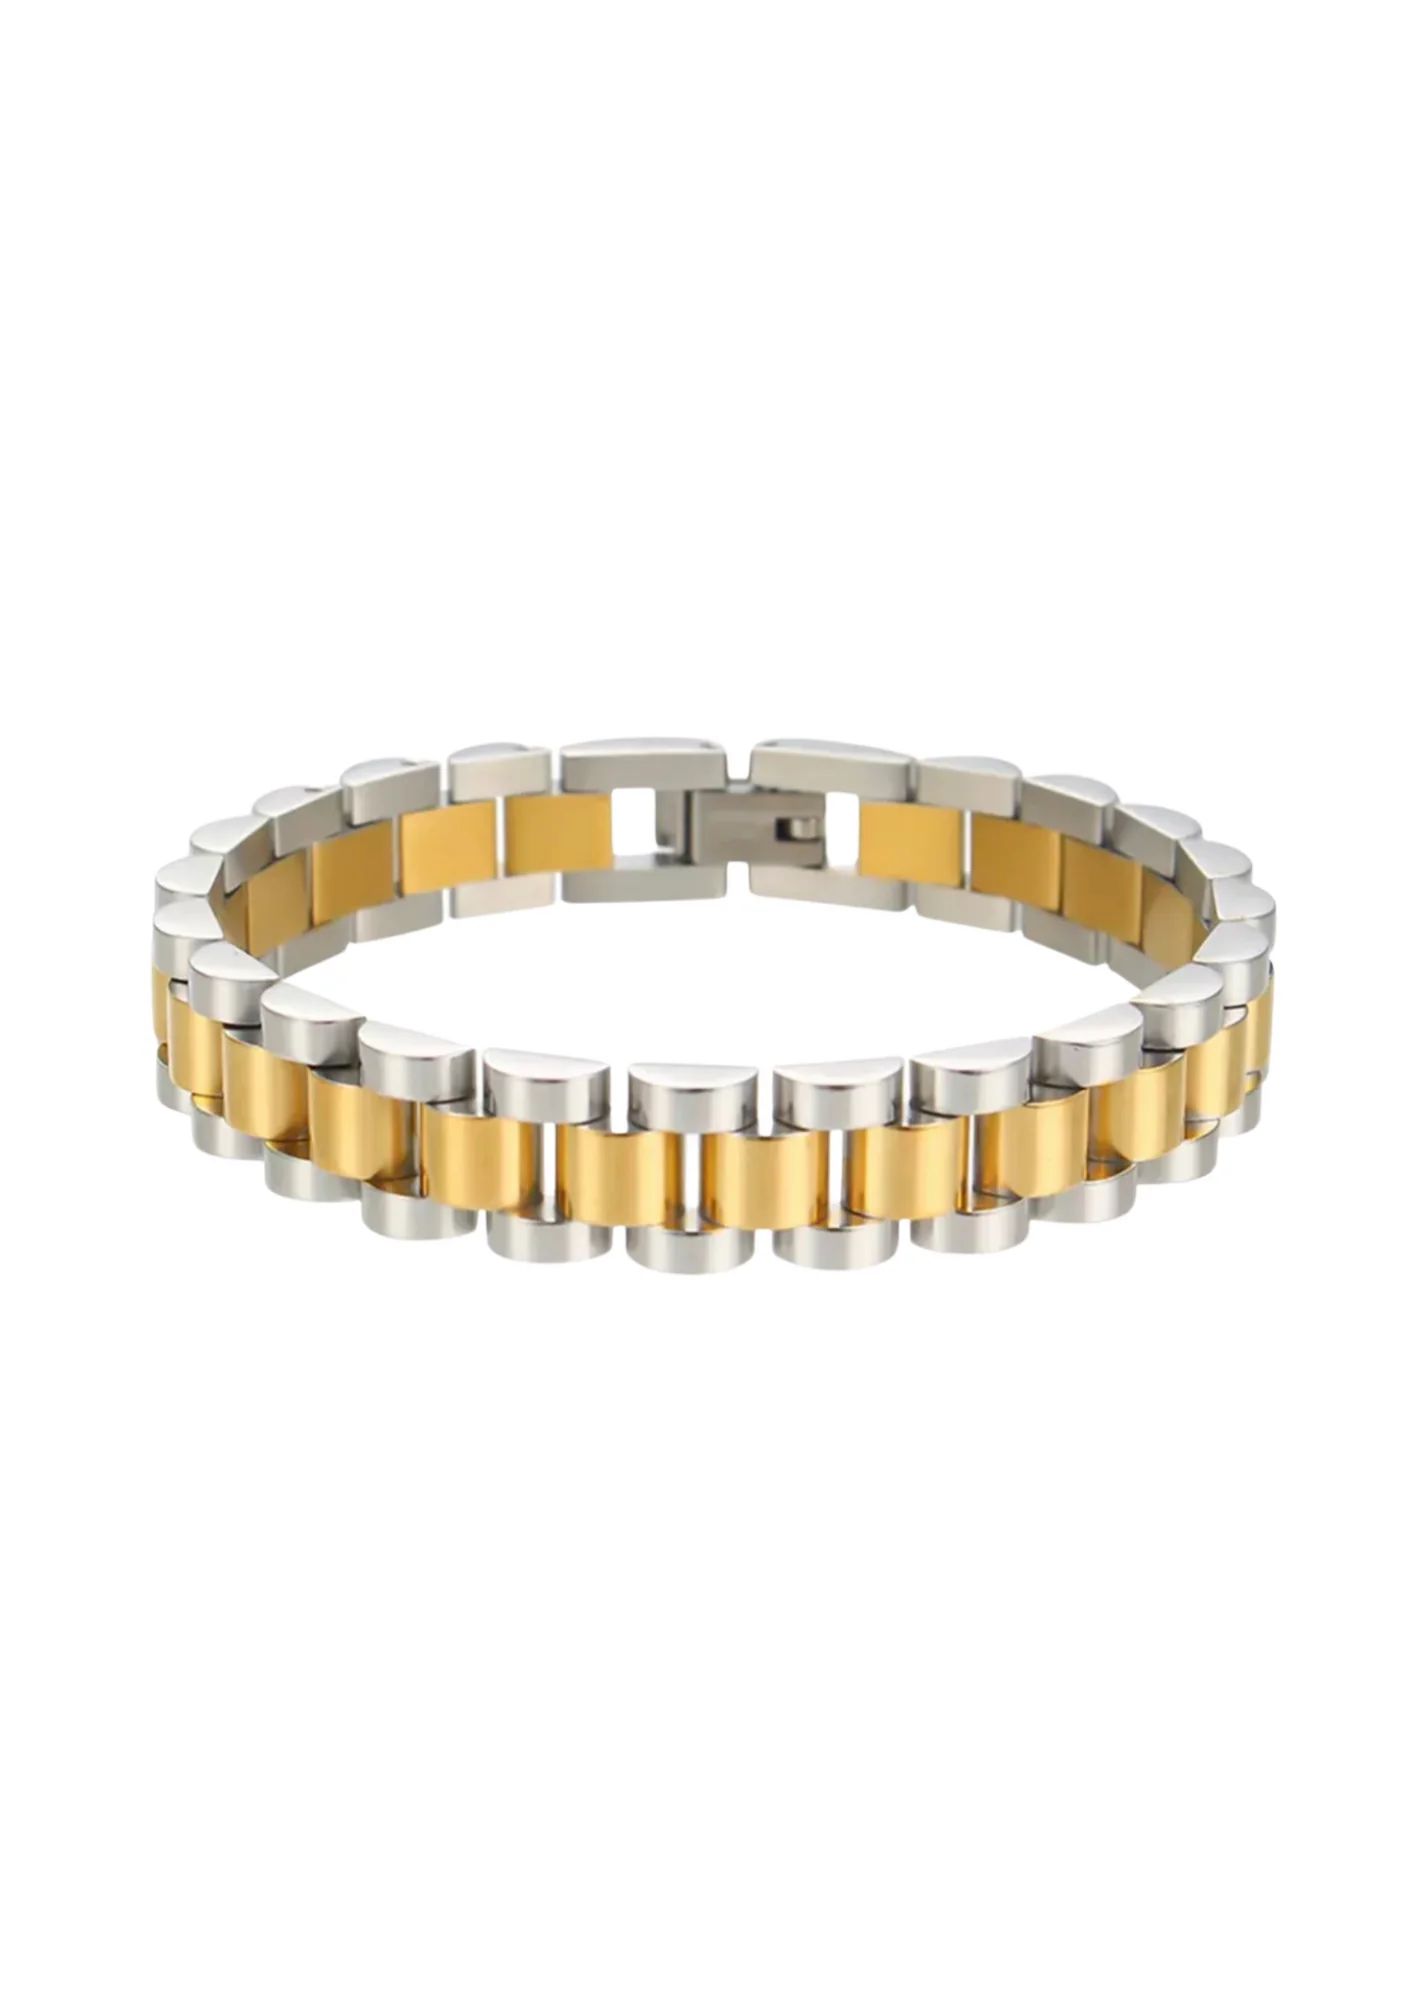 Two Toned Wristwatch Chain Bracelet | hjane jewels